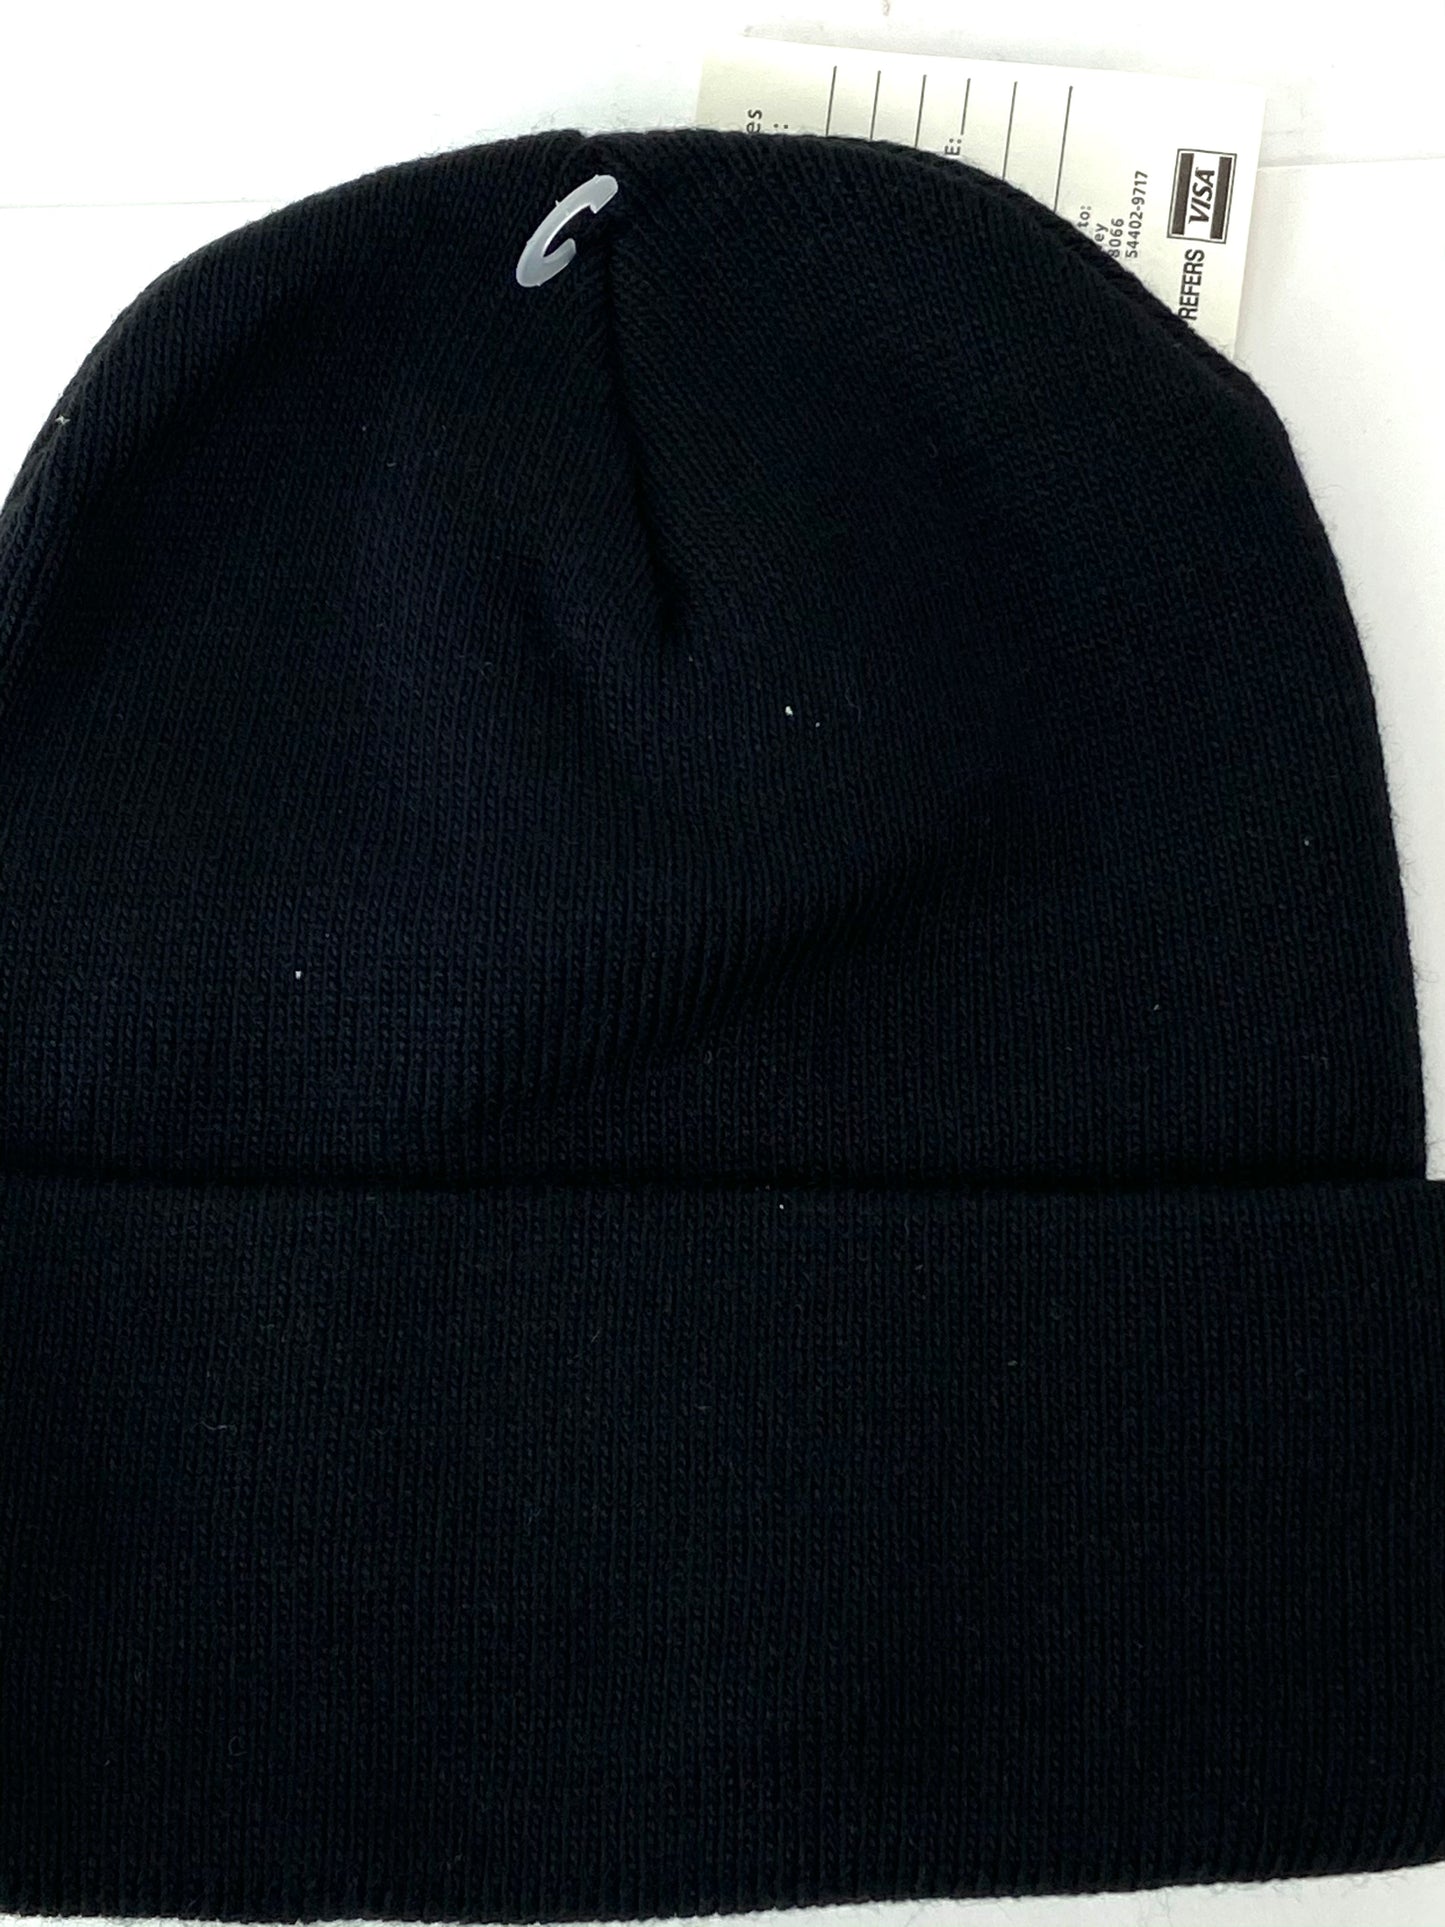 Cincinnati Bengals Vintage NFL Black Cuffed Acrylic Knit Hat By Rossmor Industries